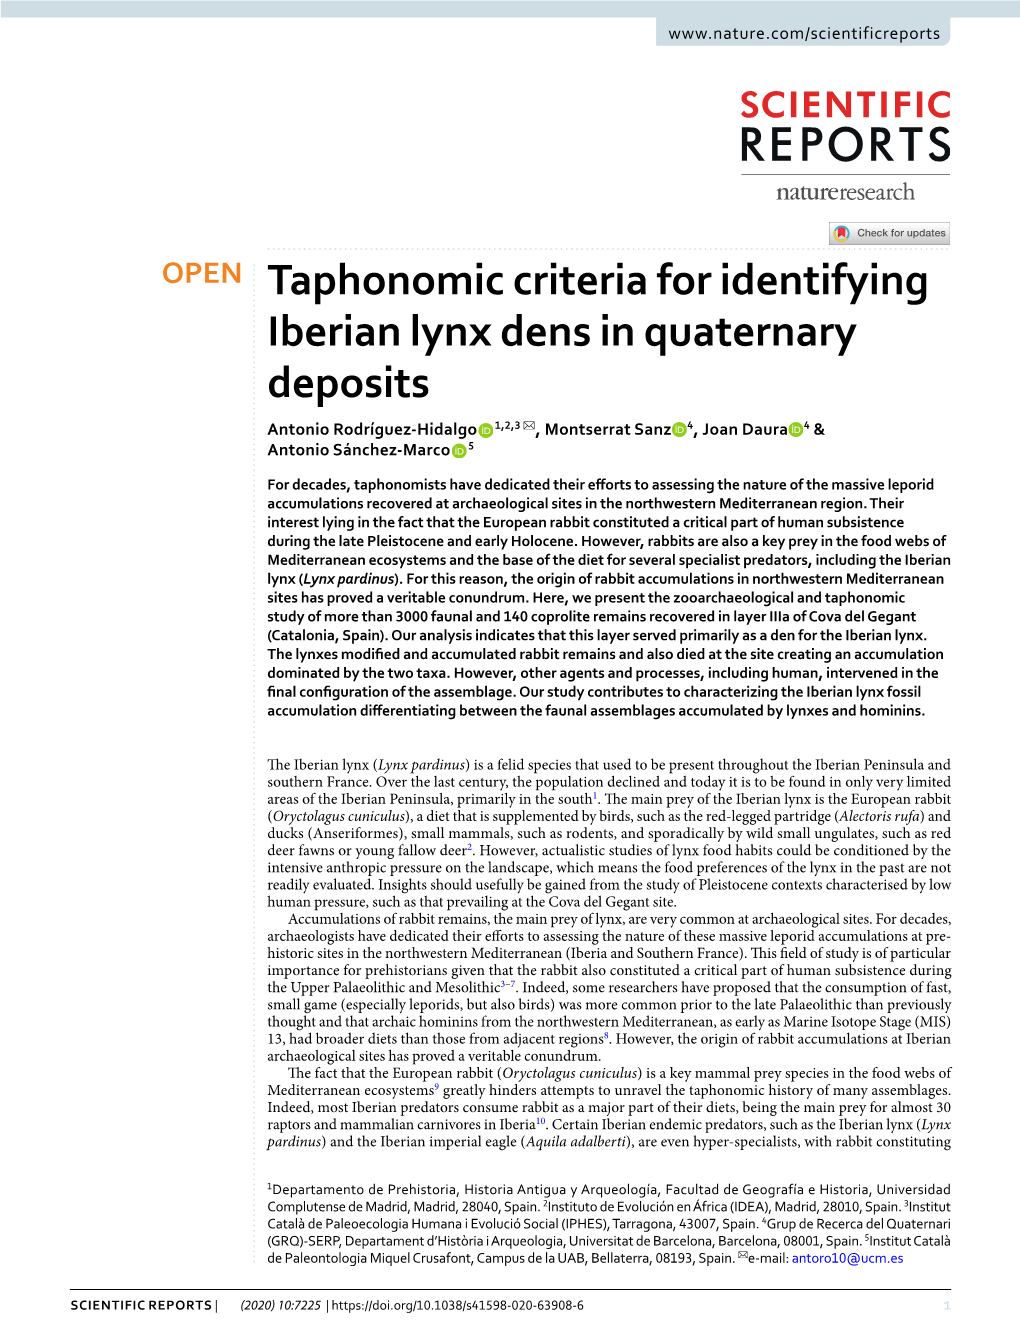 Taphonomic Criteria for Identifying Iberian Lynx Dens in Quaternary